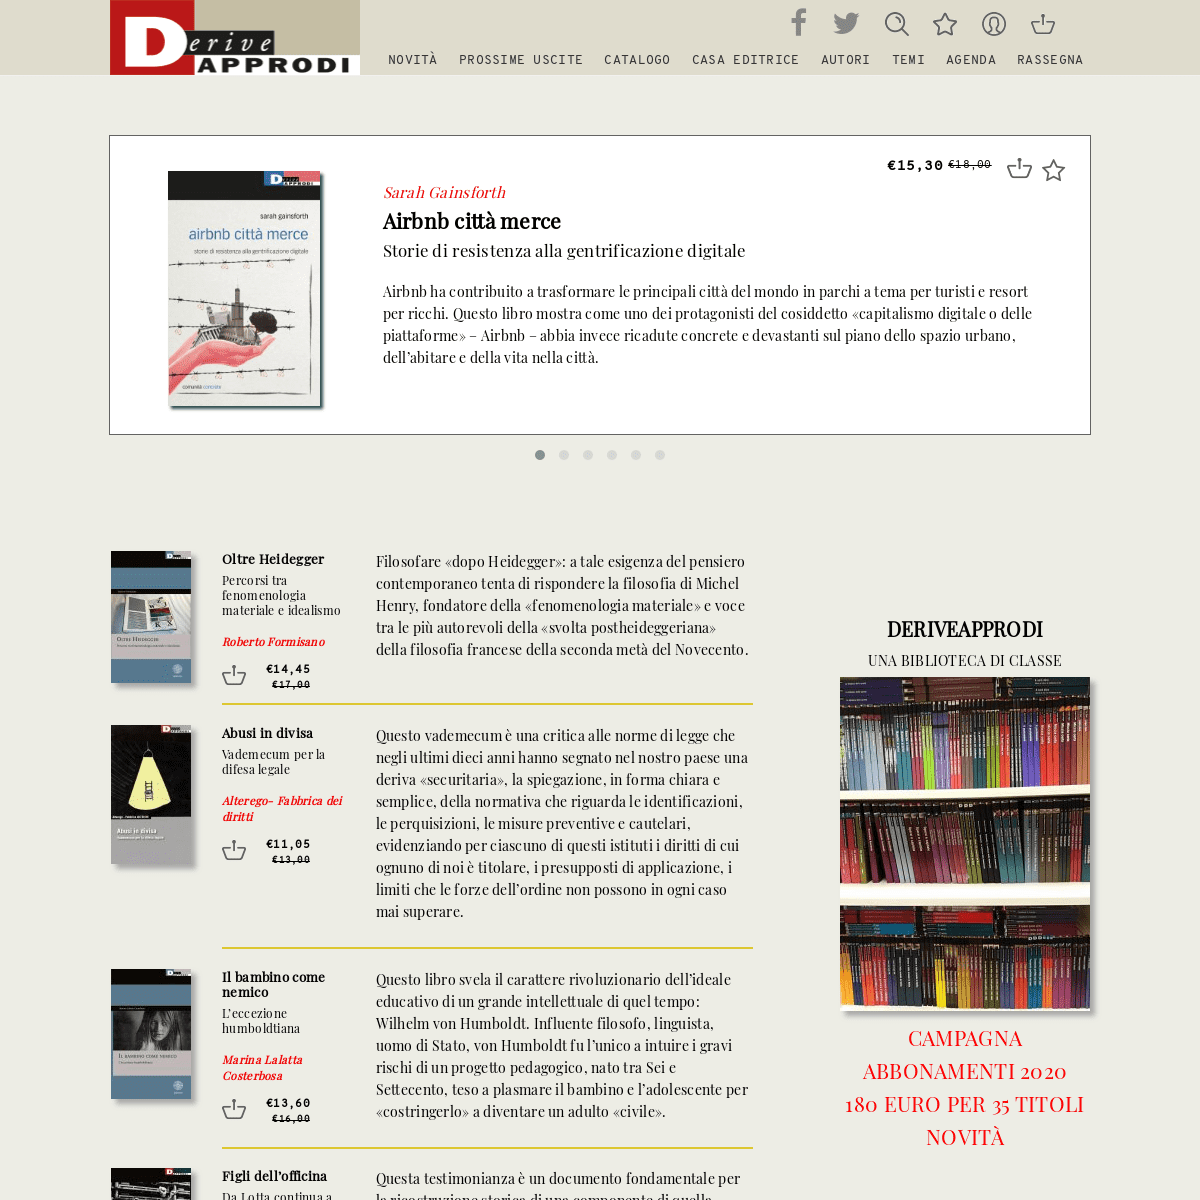 A complete backup of deriveapprodi.com